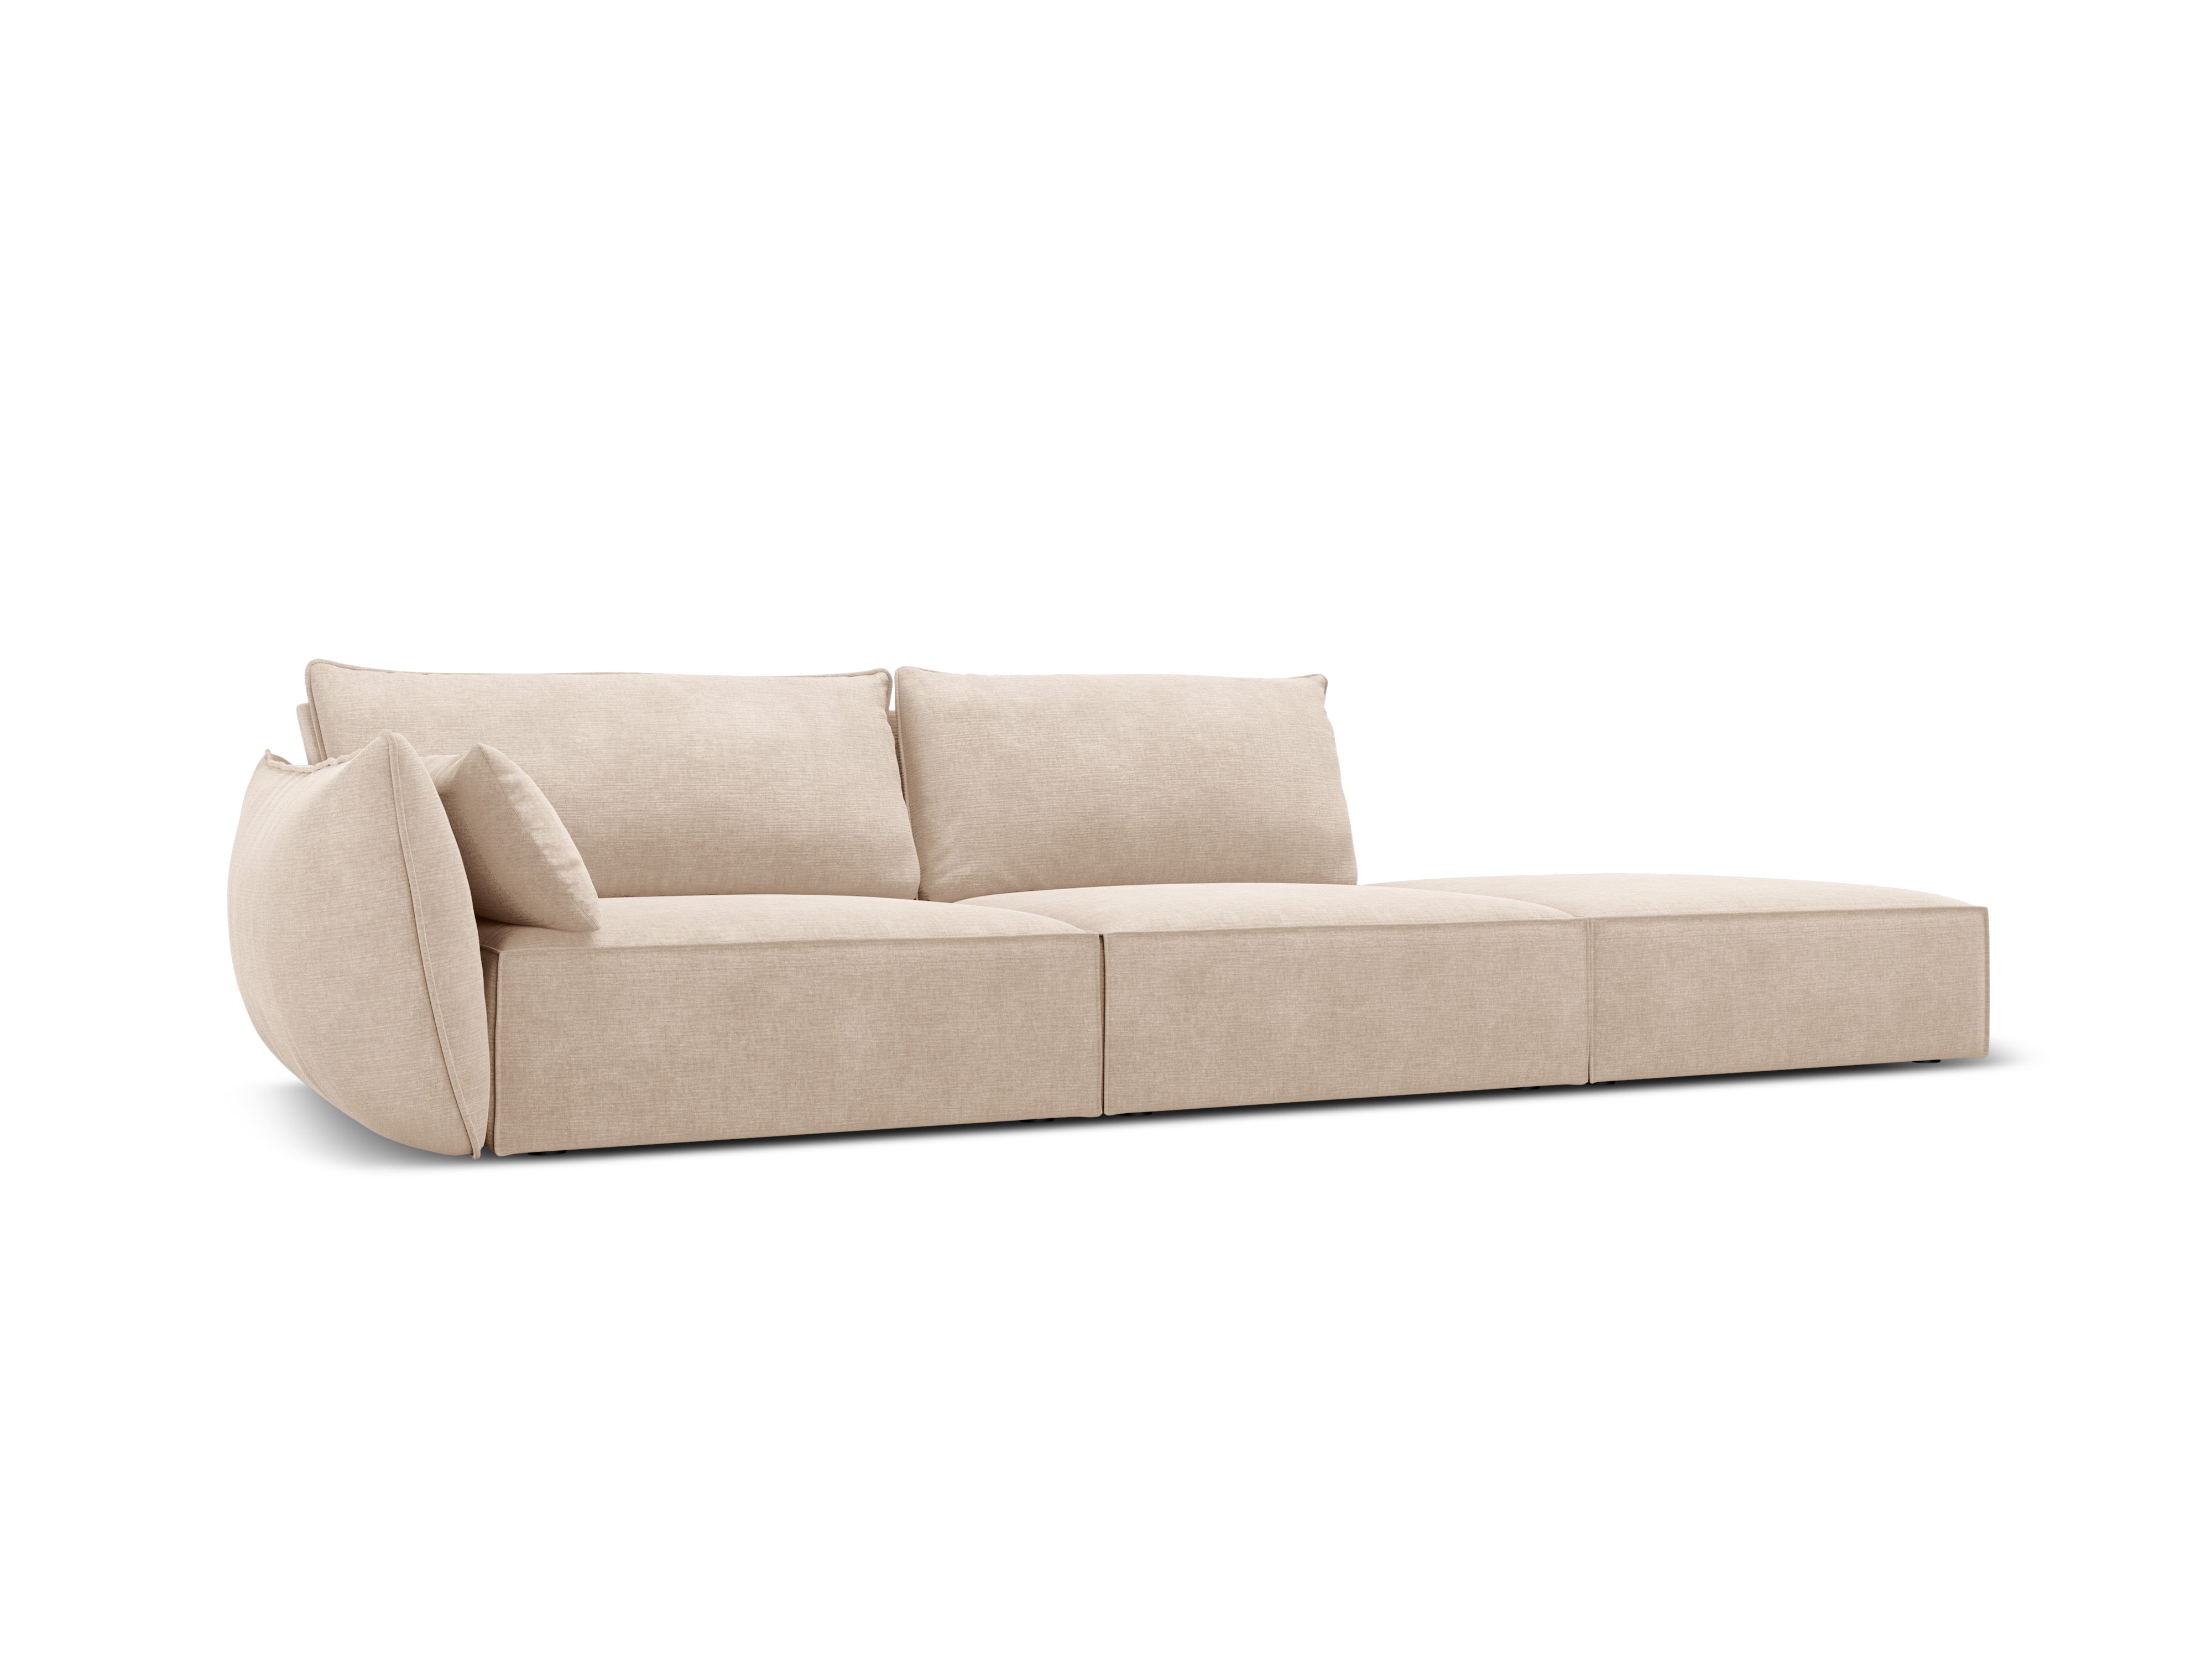 Right Sofa, "Vanda", 4 Seats, 286x100x85
Made in Europe, Mazzini Sofas, Eye on Design